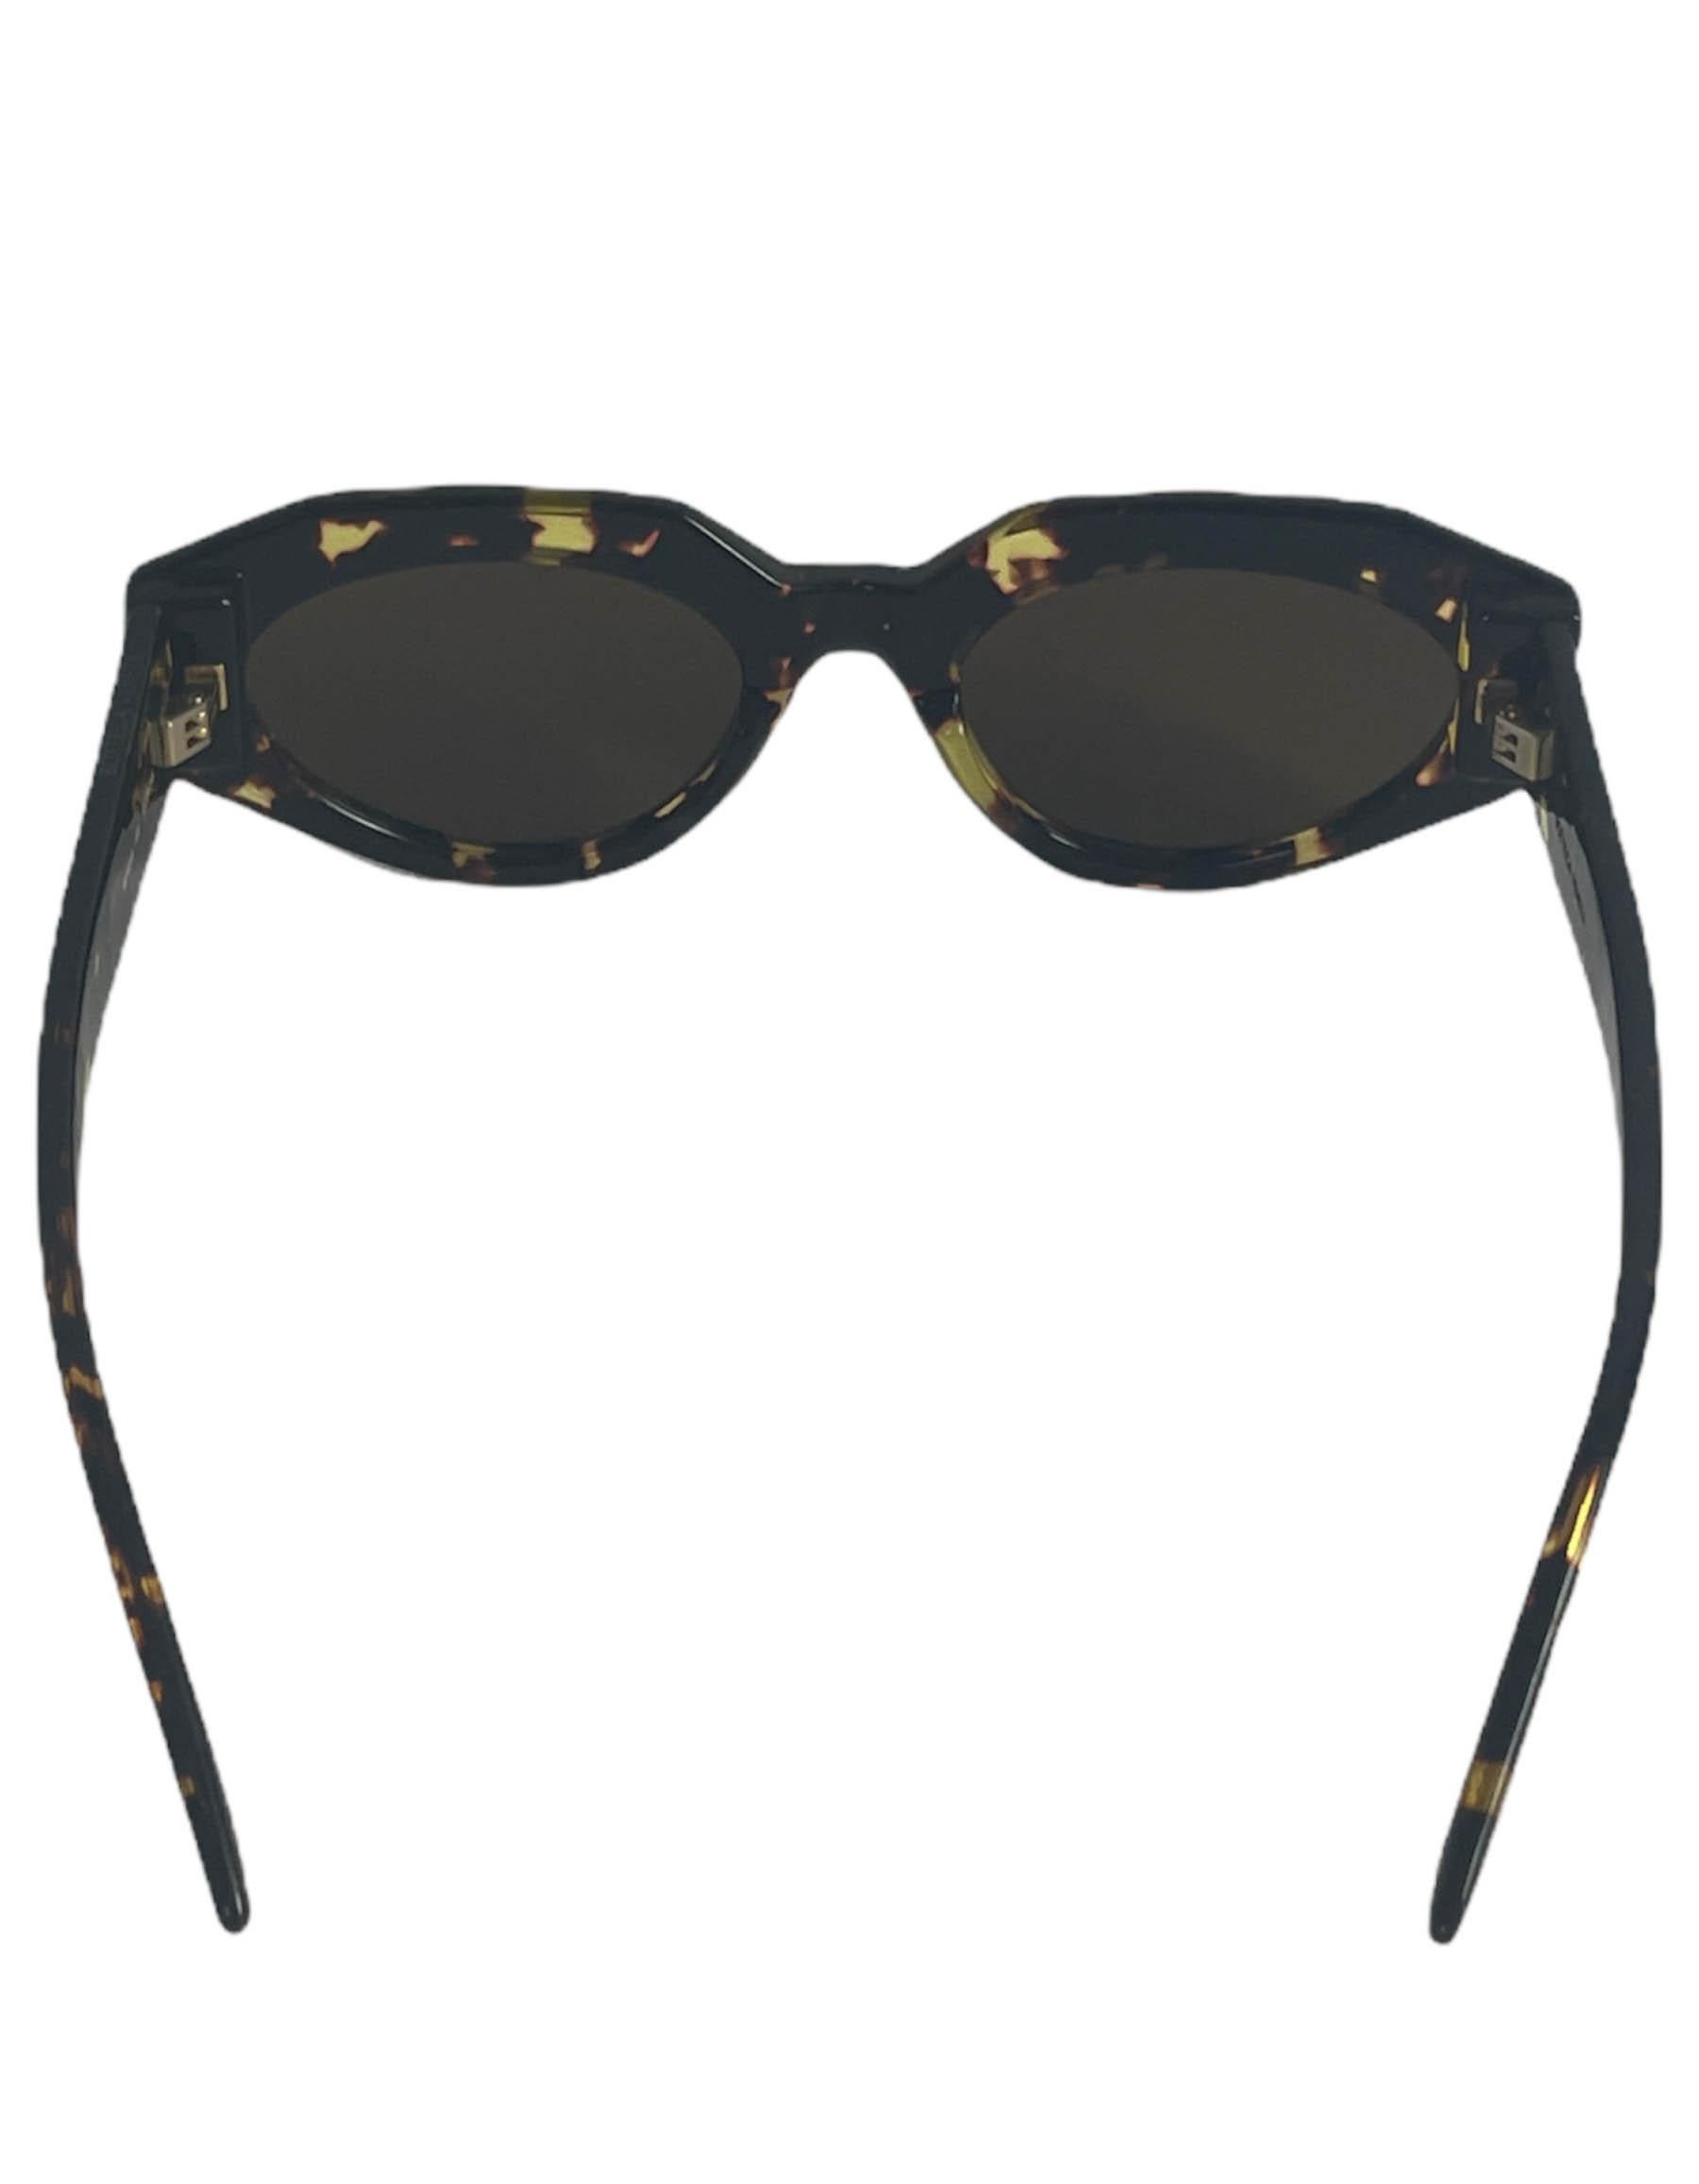 Bottega Veneta Havana Brown Tortoise Round Sunglasses In Excellent Condition In New York, NY